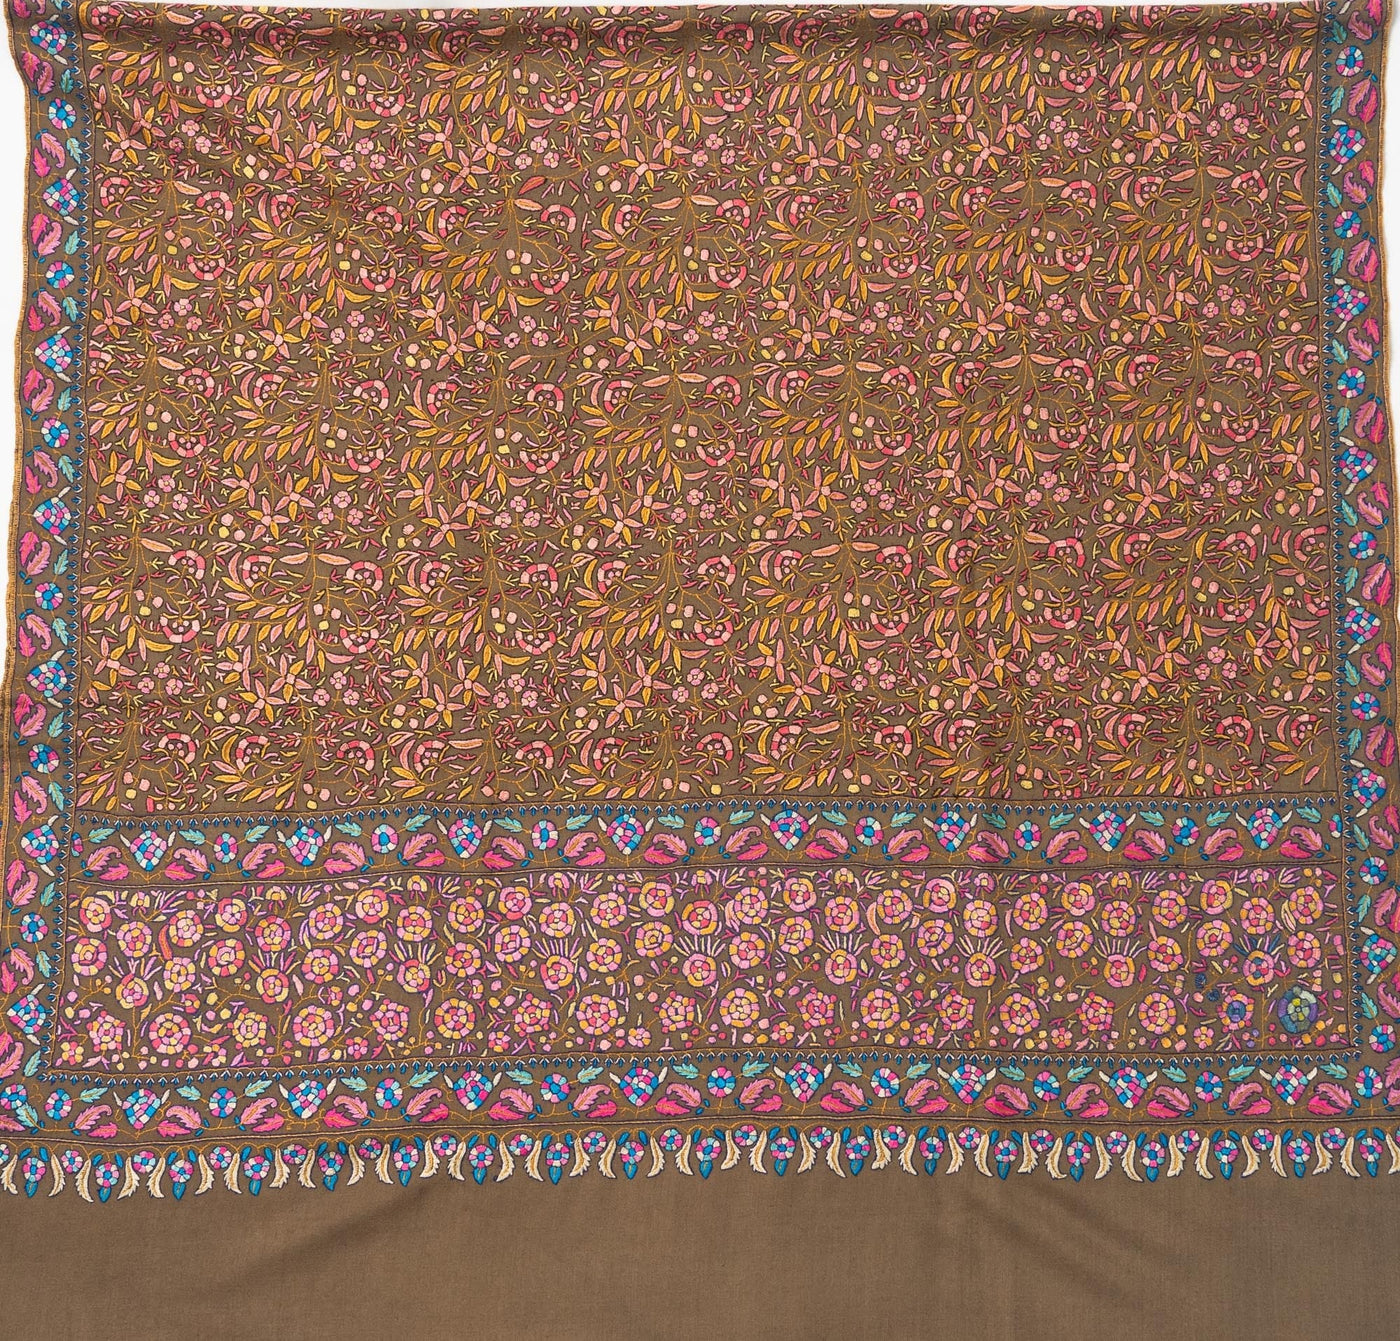 Noor-E-Chinar: Hand-Embroidered Kashmiri Pure Pashmina Jamawar Shawl (Papier Mache)